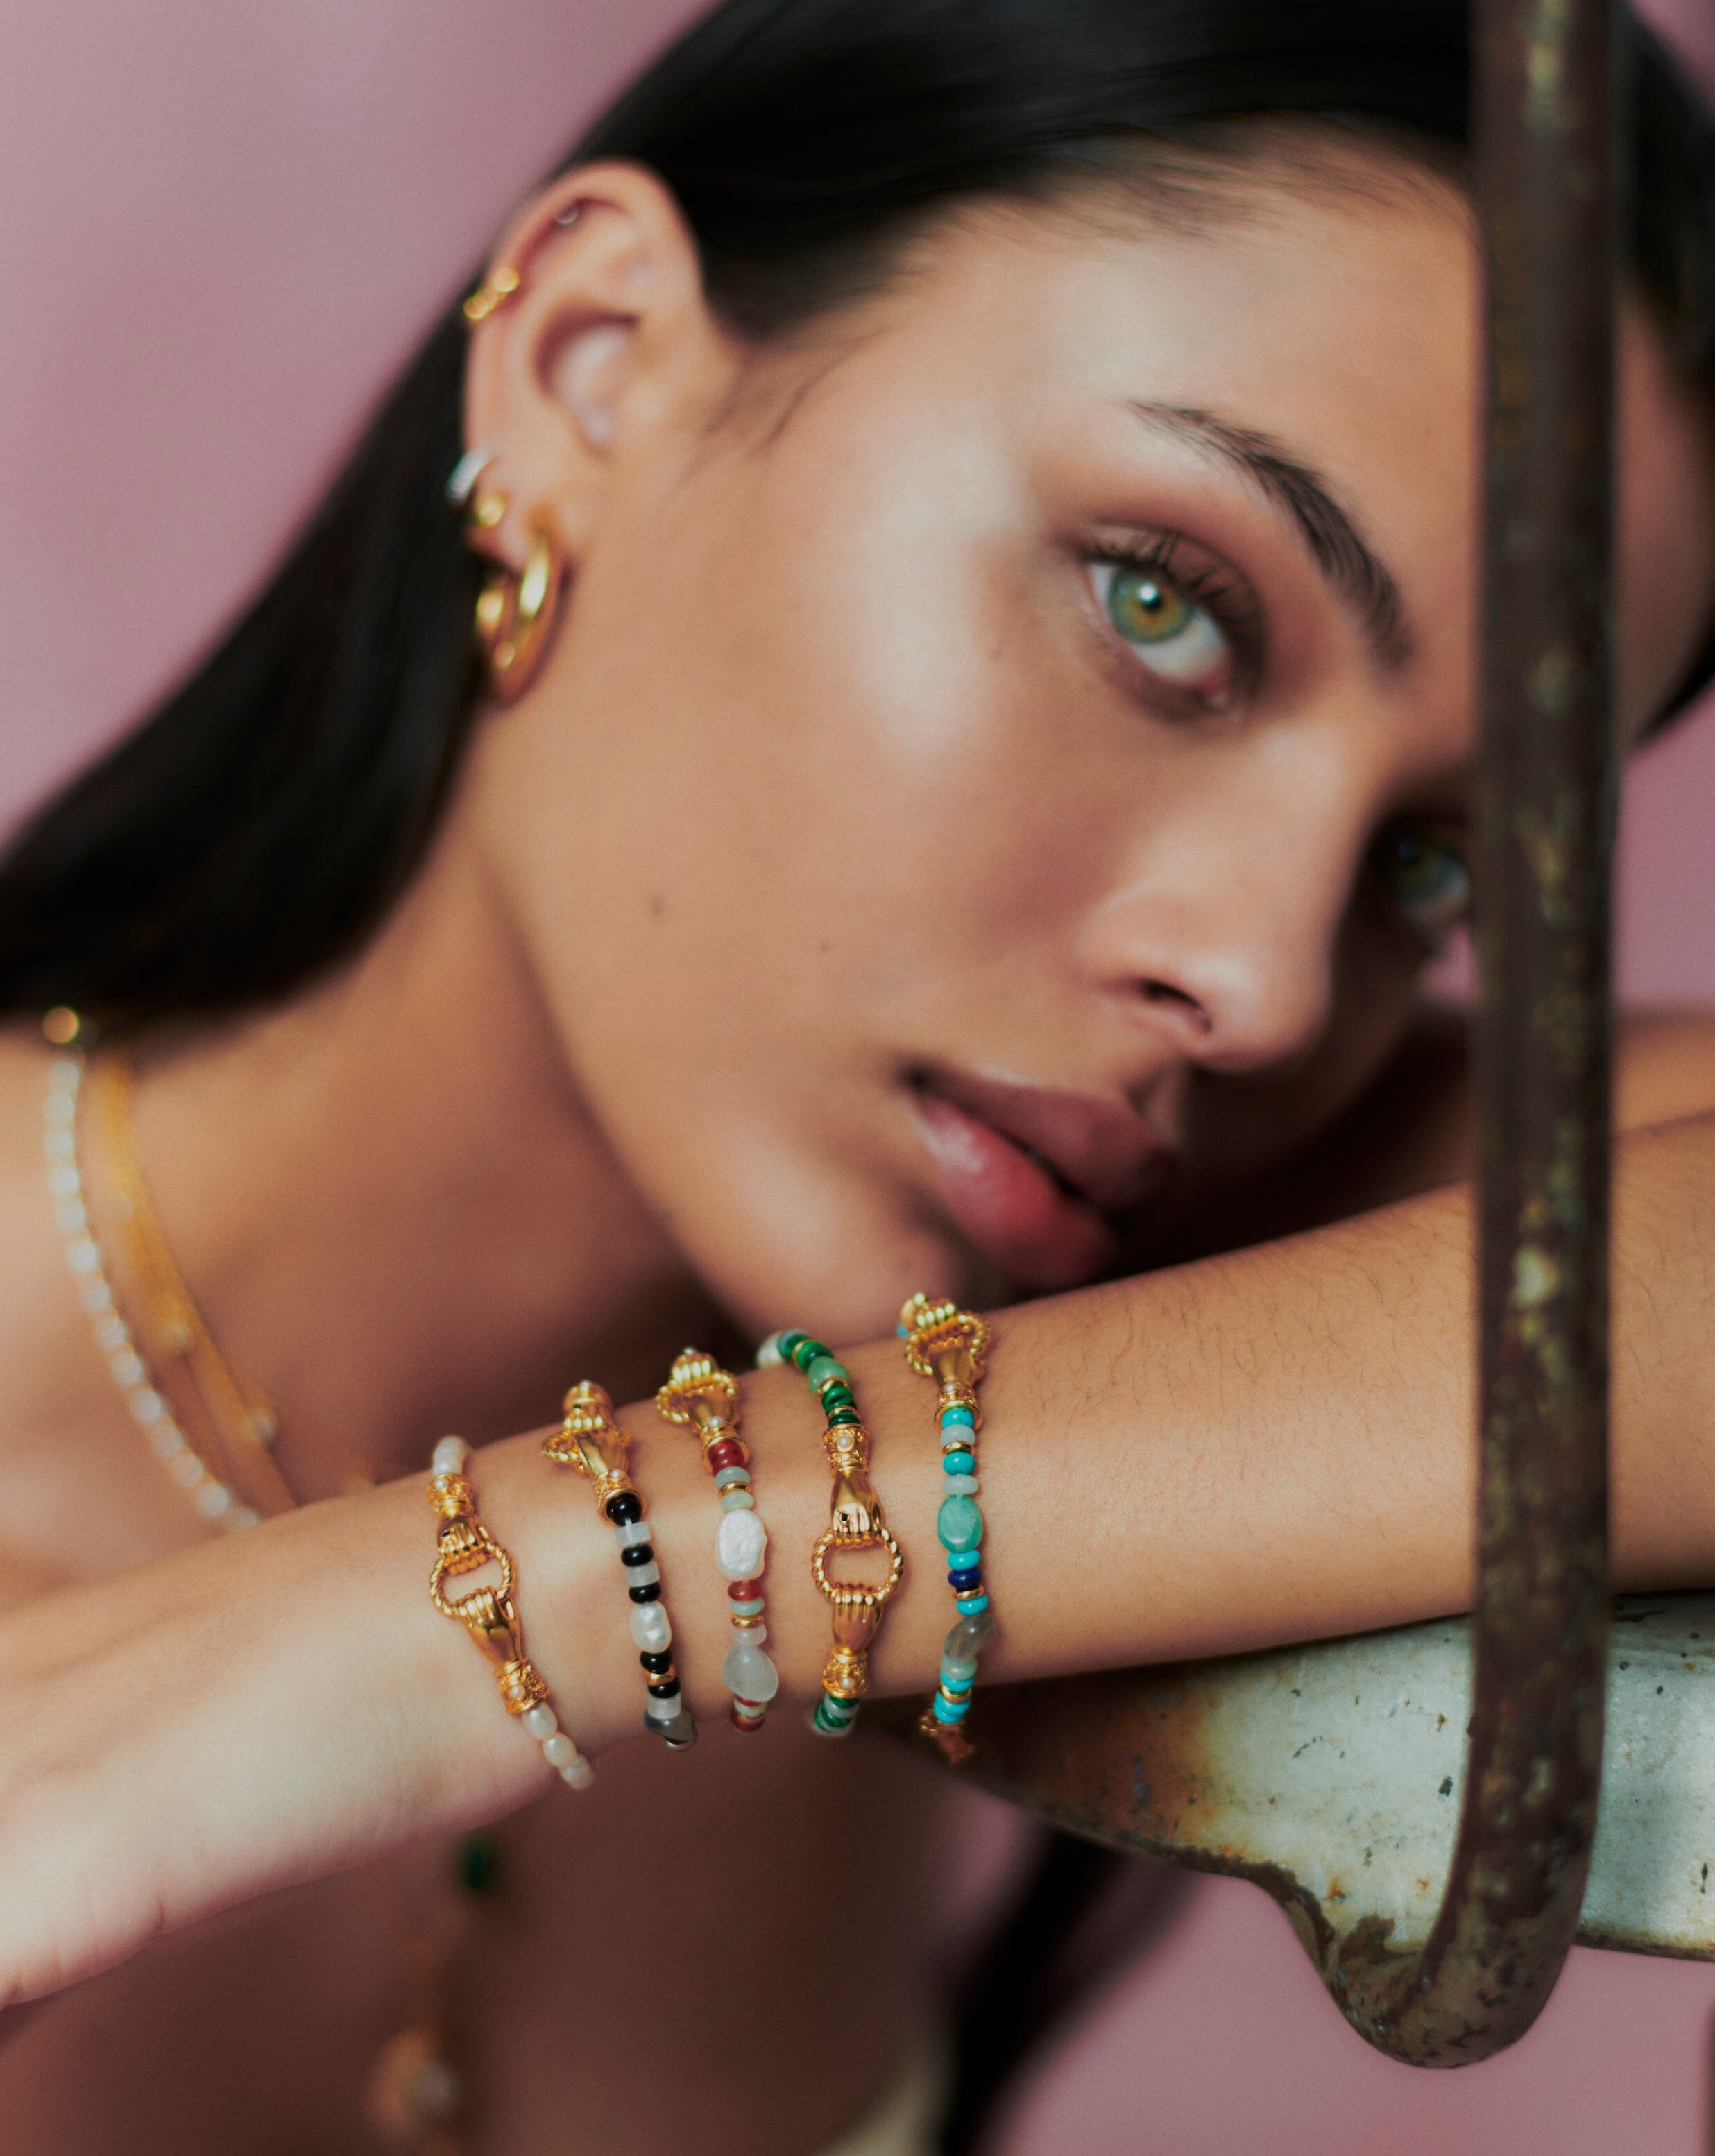 Harris Reed In Good Hands Beaded Gemstone Bracelet | 18ct Gold Plated/Turquoise, Lapis & Pearl Bracelets Missoma 